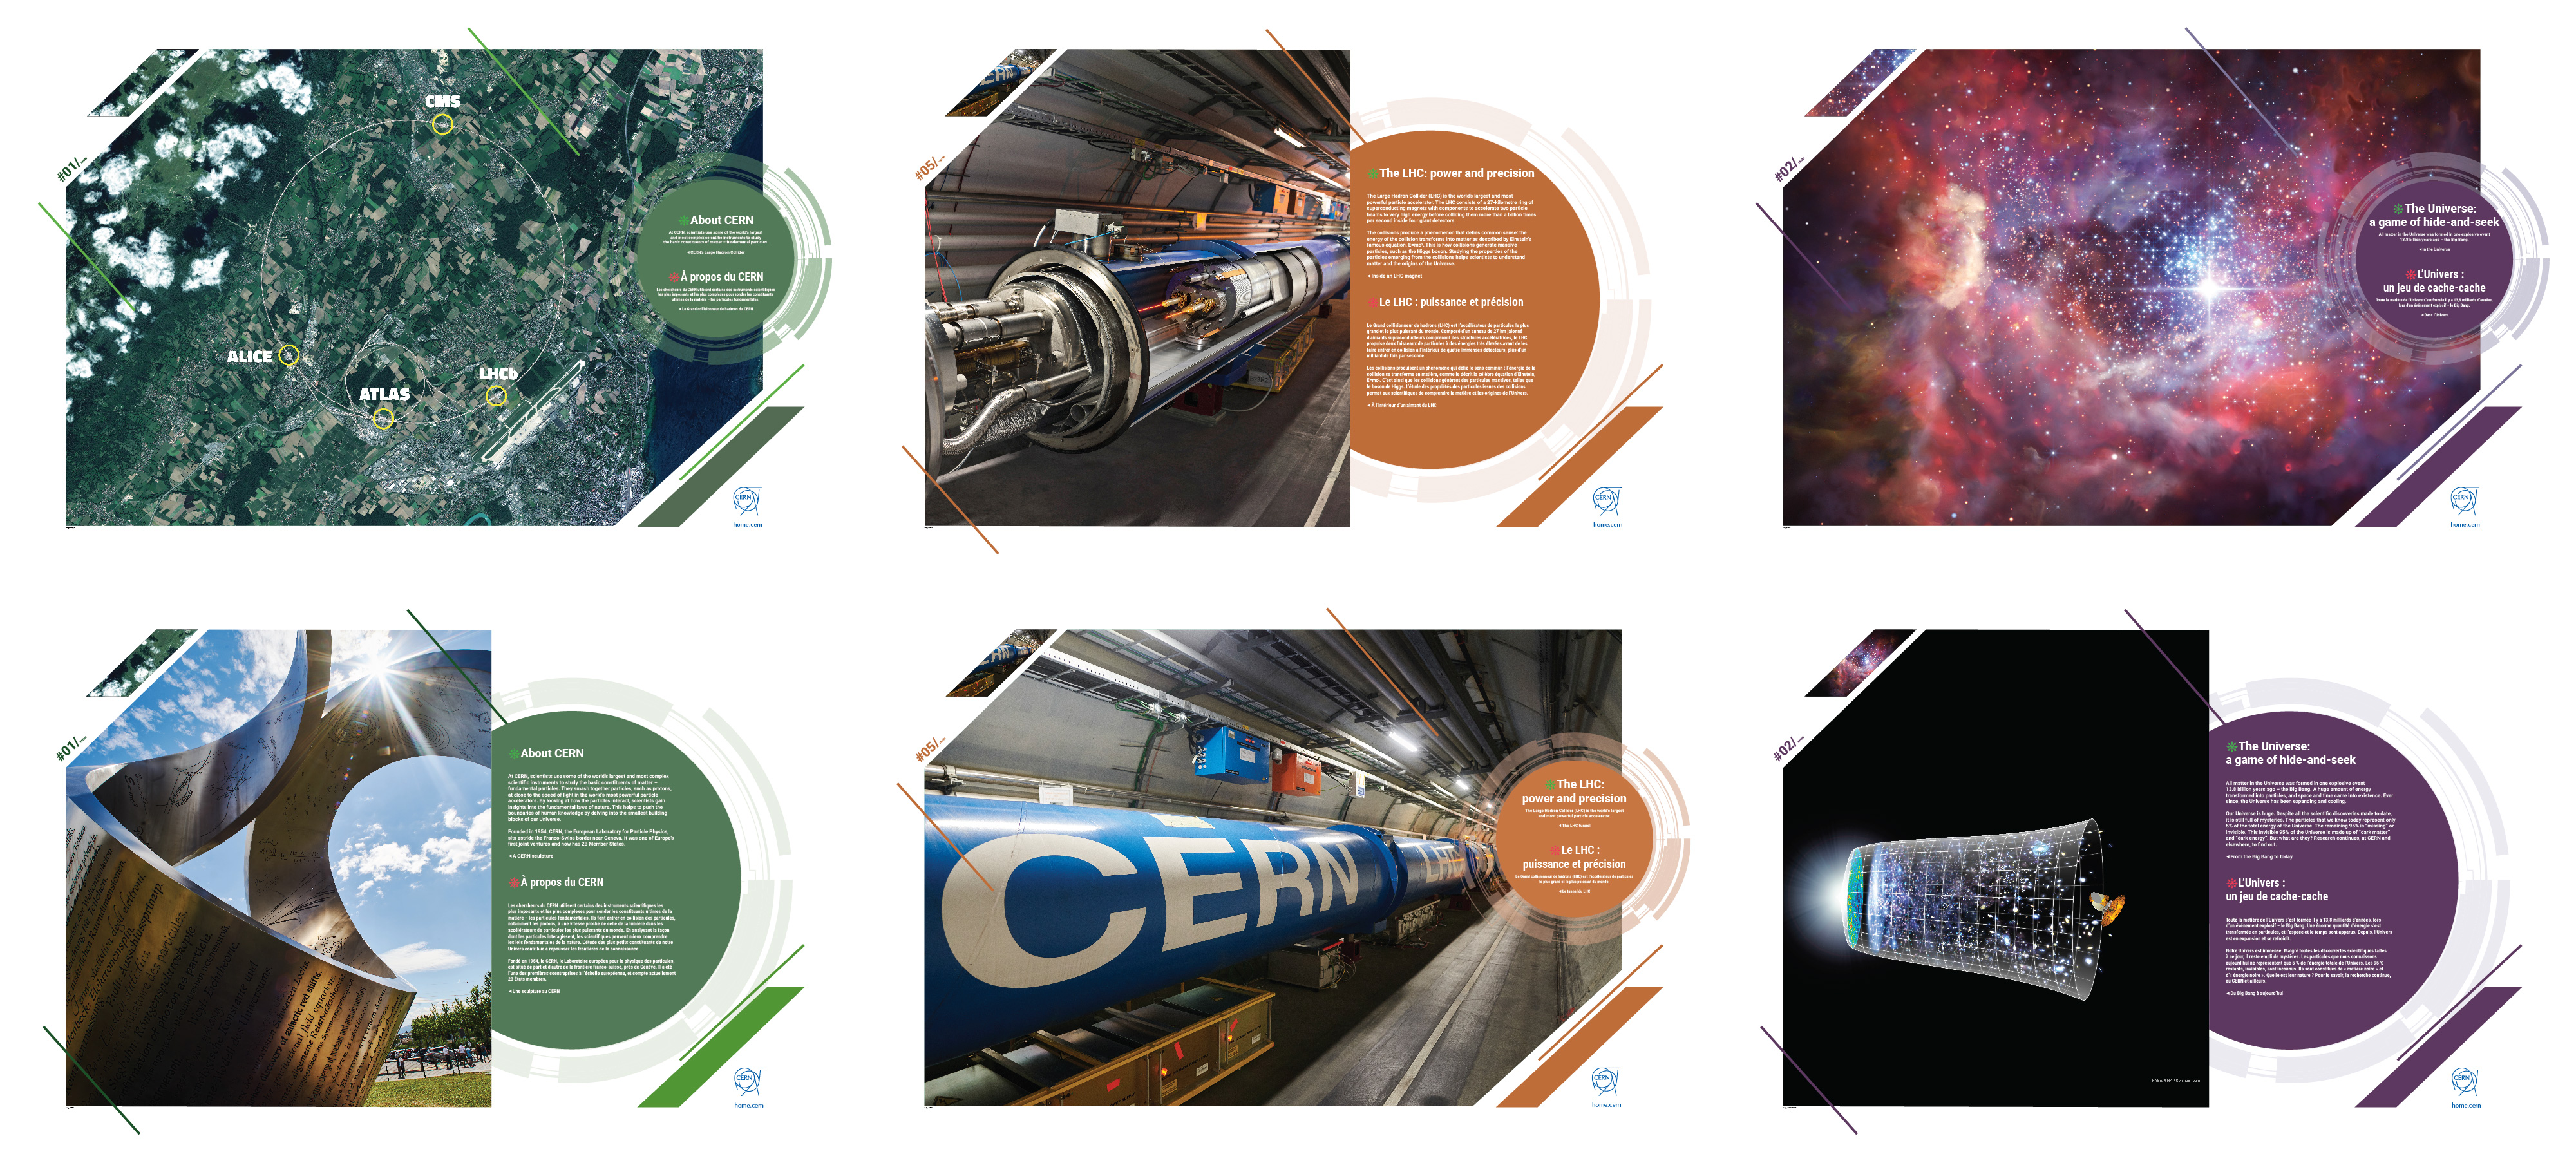 CERN in images exhib 